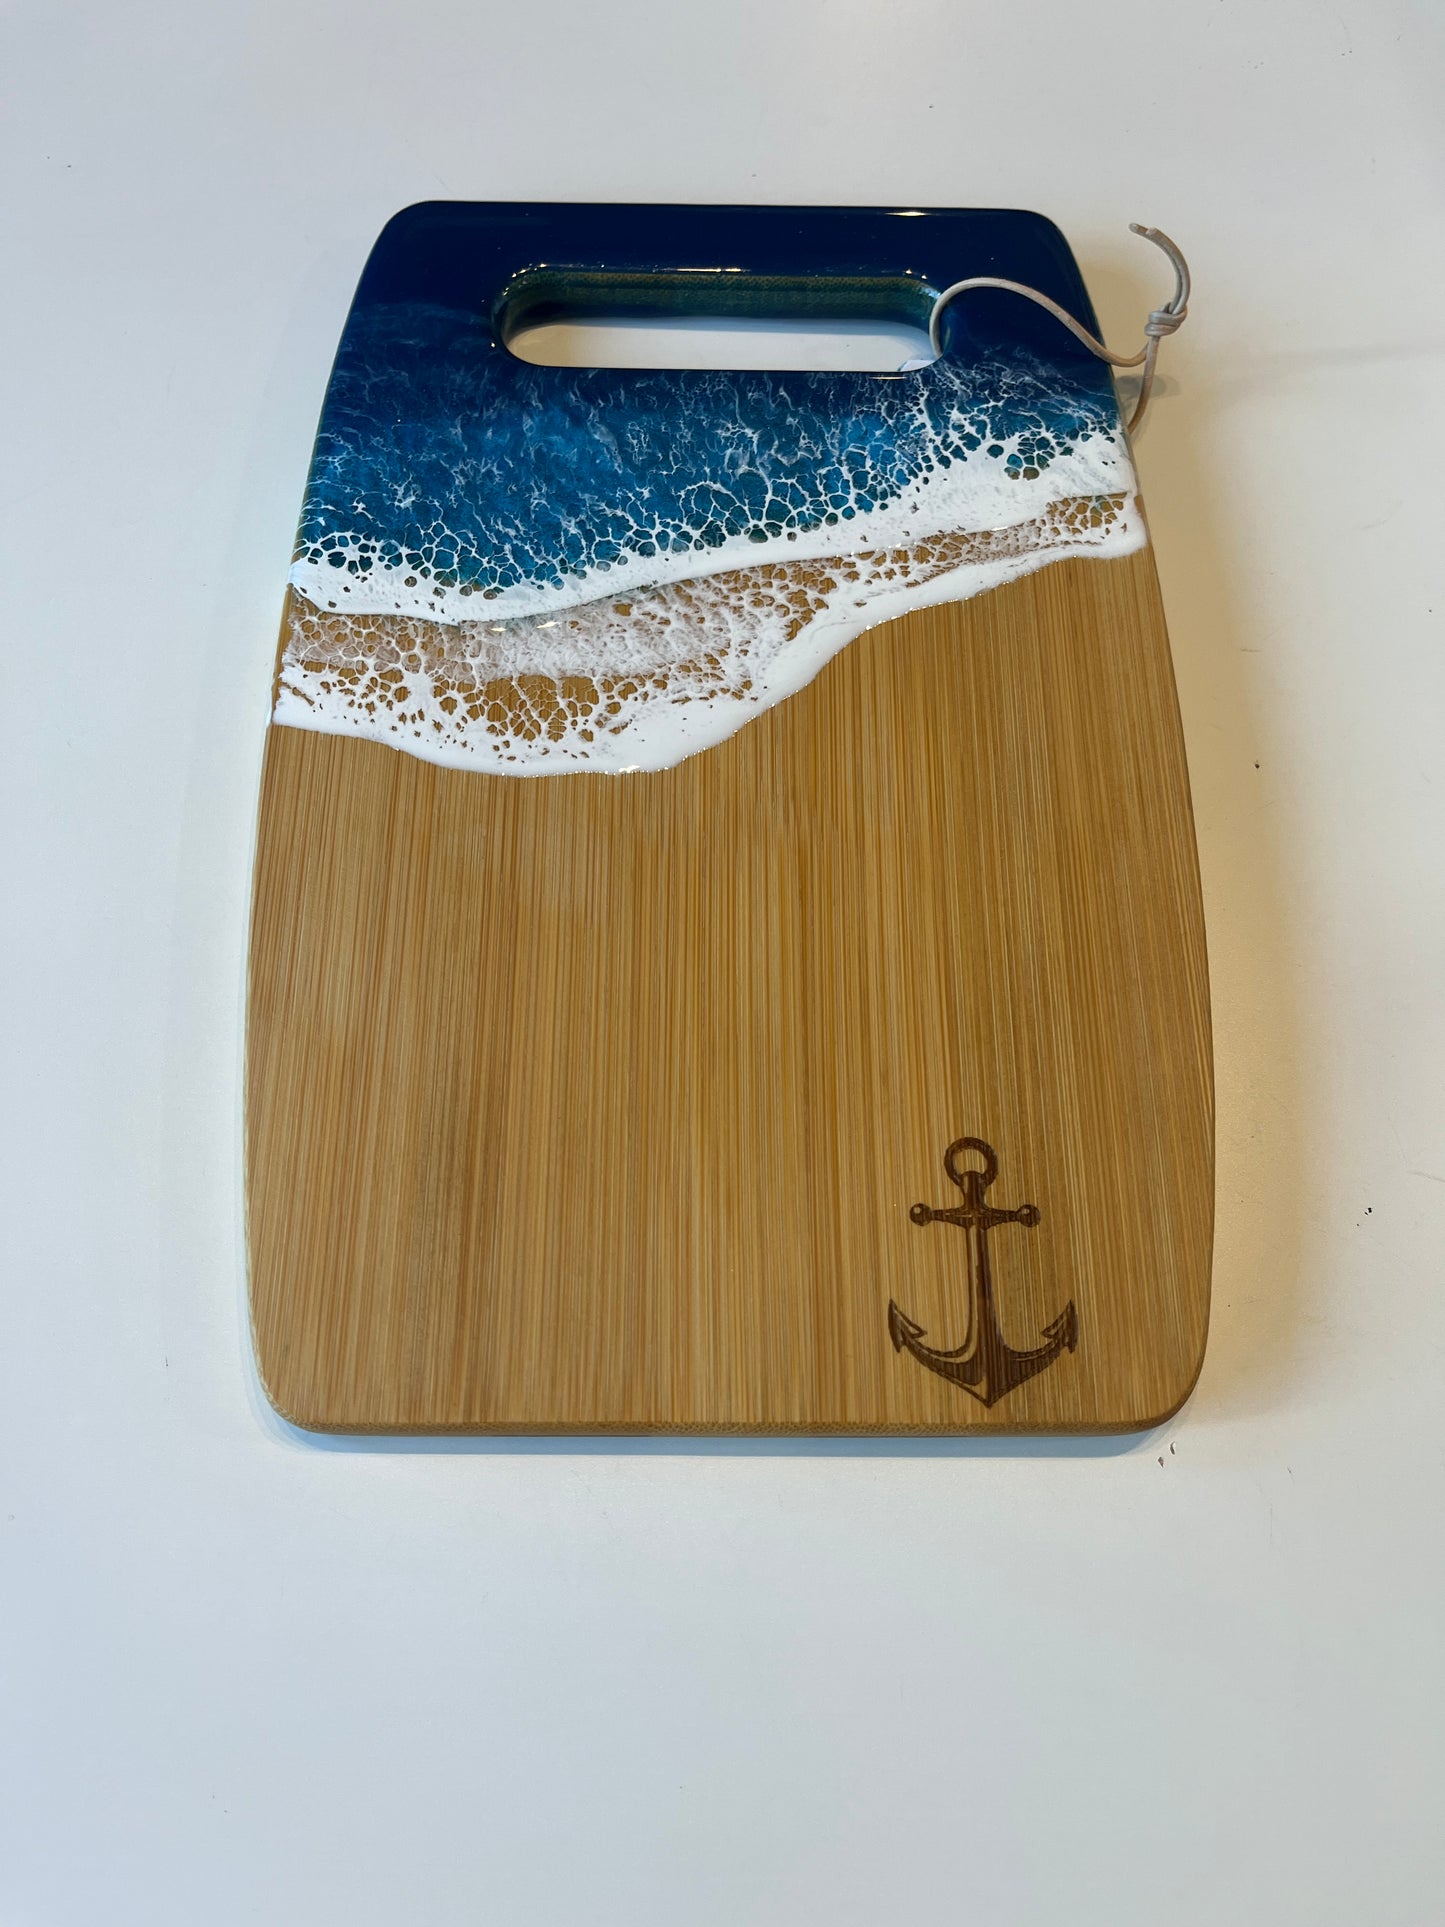 Anchor Cheese / Cutting / Charcuterie Board - Ocean Waves - Large